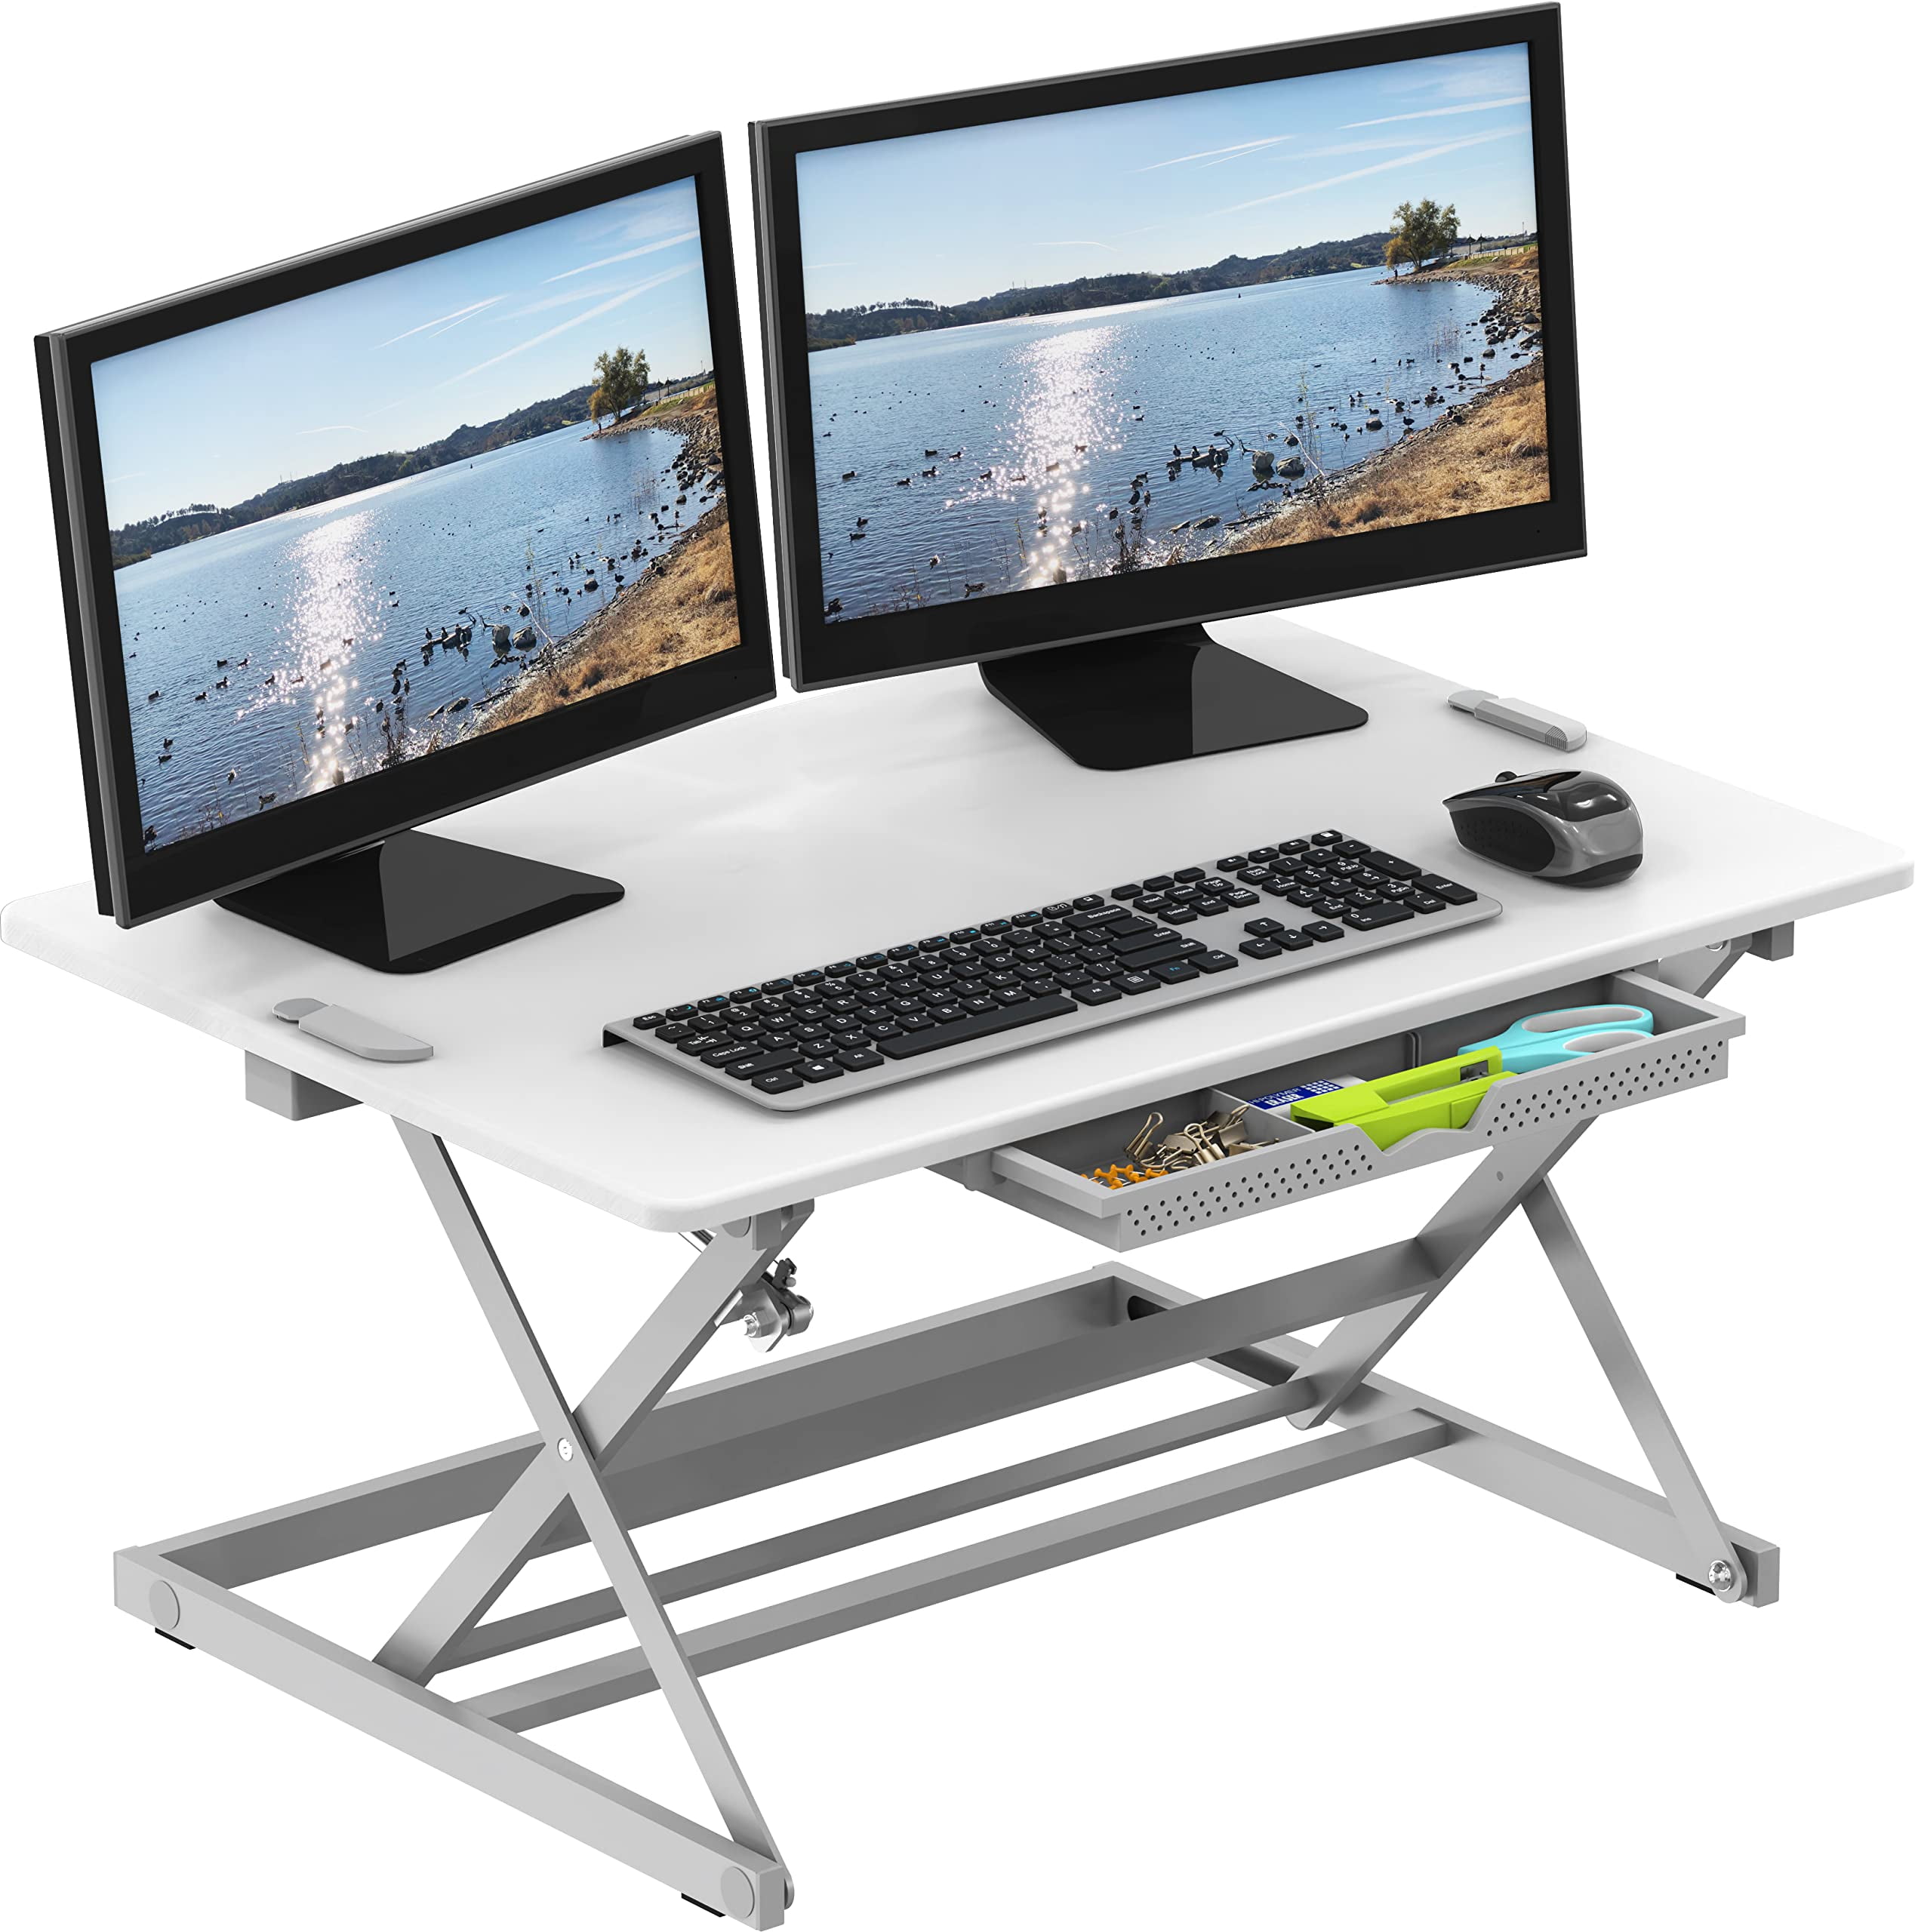 SHW 32-Inch Height Adjustable Standing Desk Converter Riser